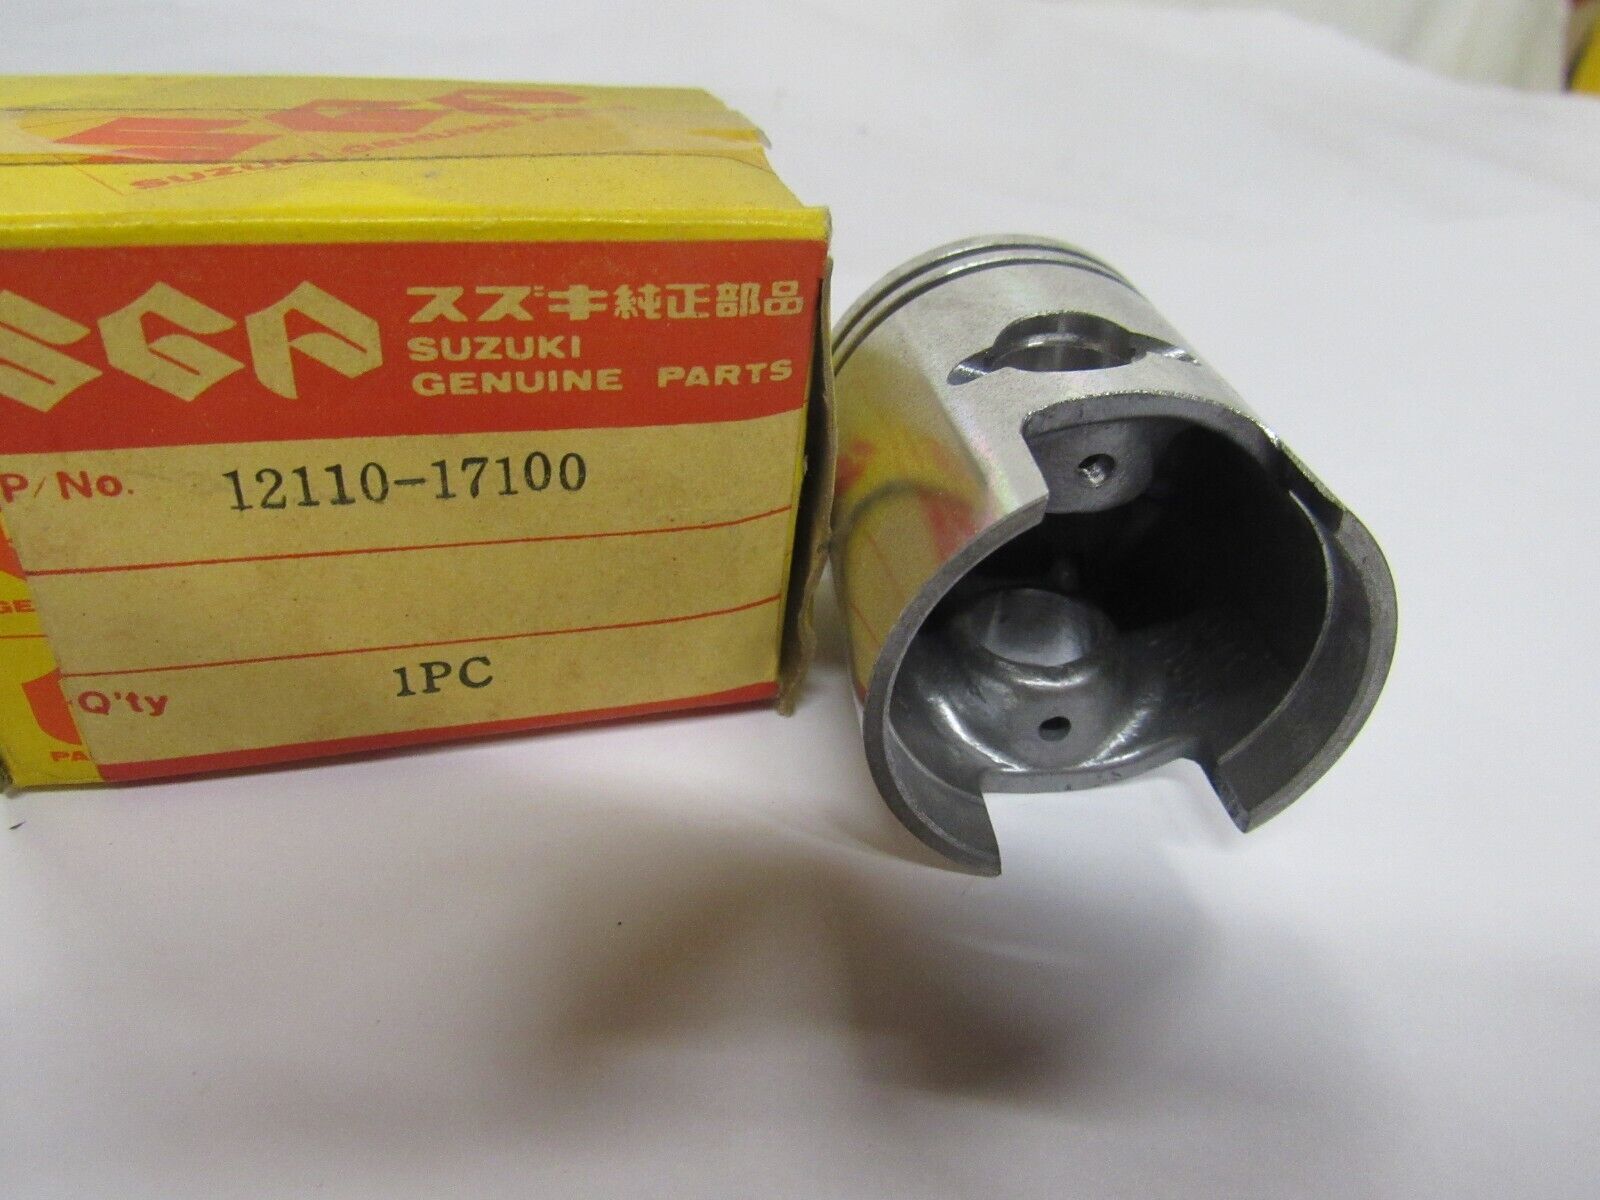 NOS Suzuki Genuine Factory Standard Bore STD Piston Assembly 12110-17100